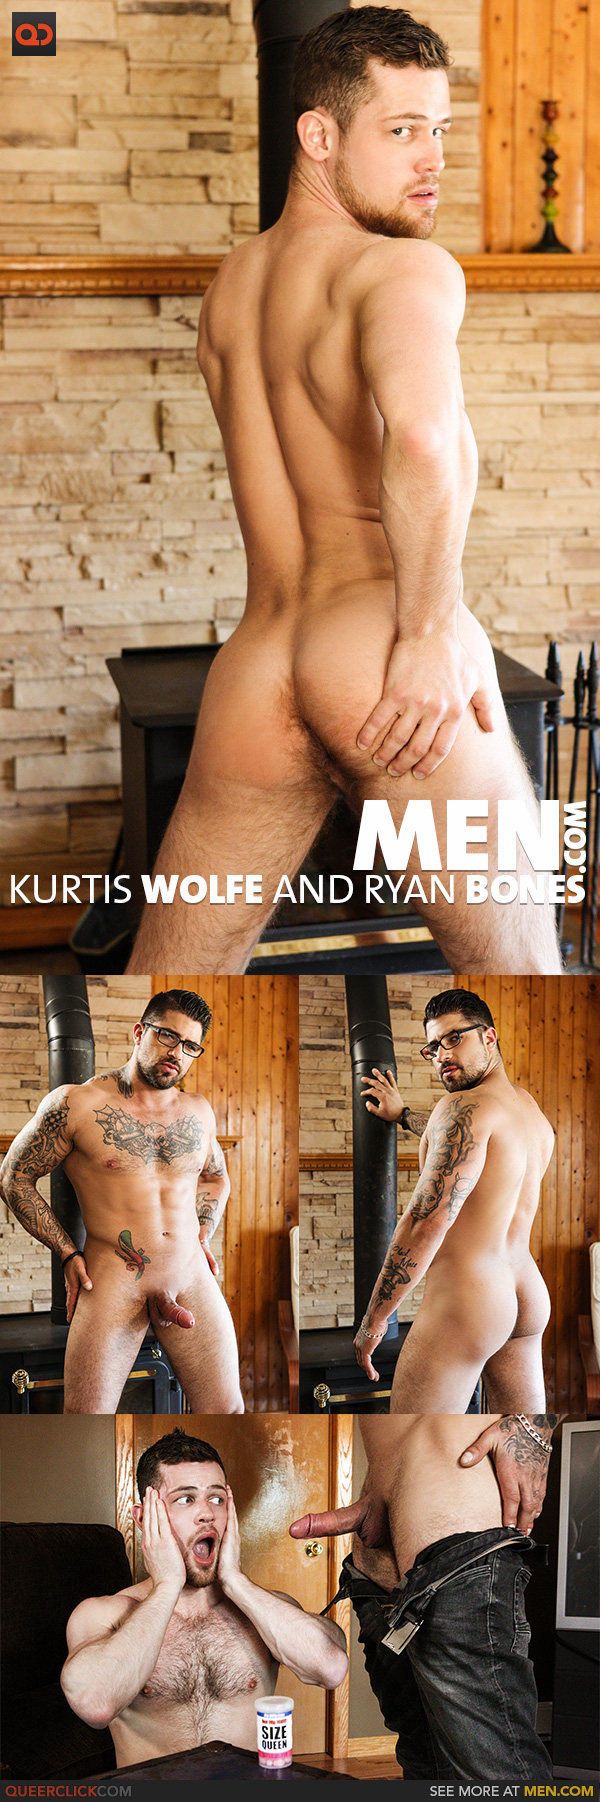 Men.com: Kurtis Wolfe and Ryan Bones